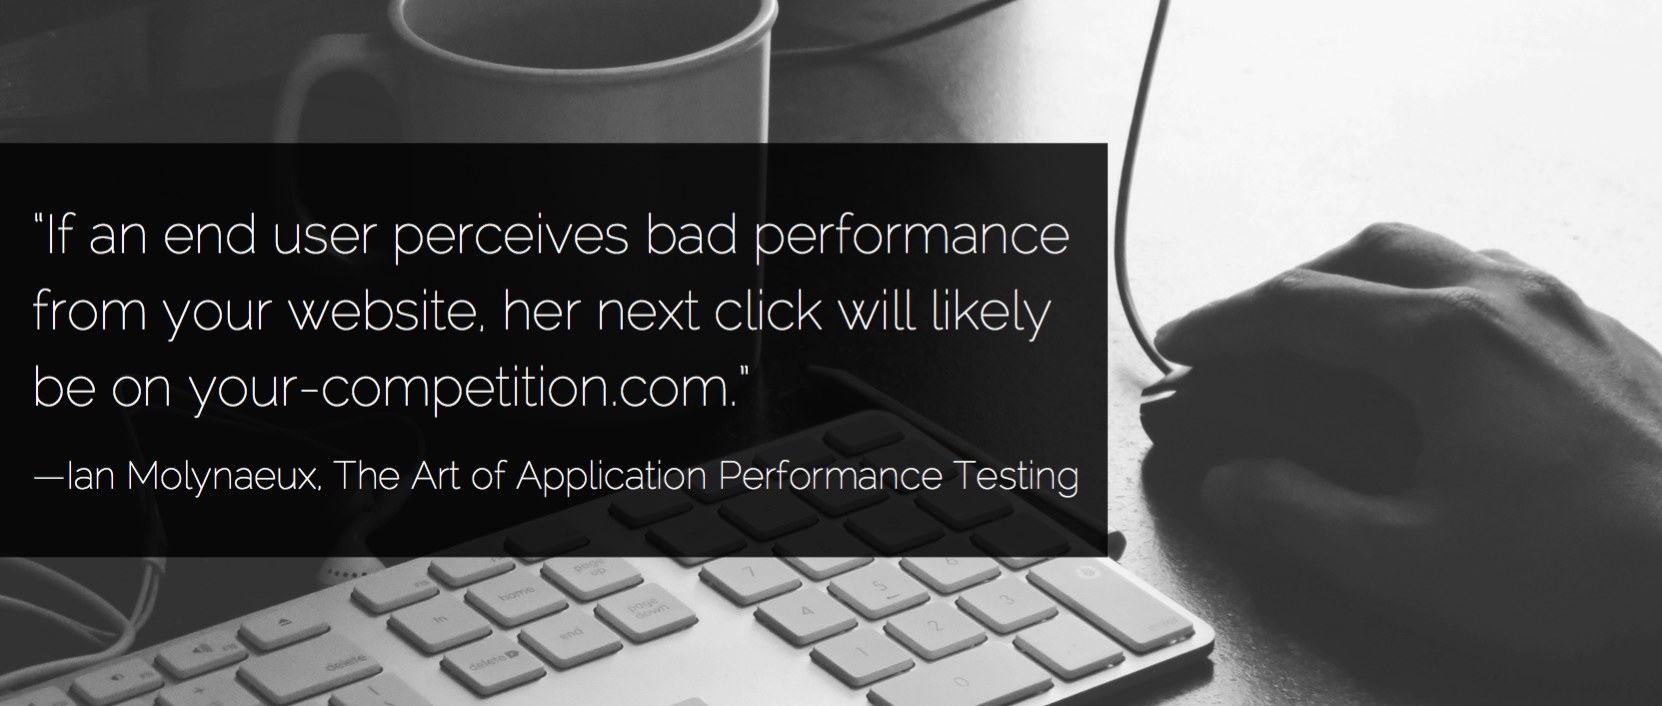 user preceives bad performance smartmeter